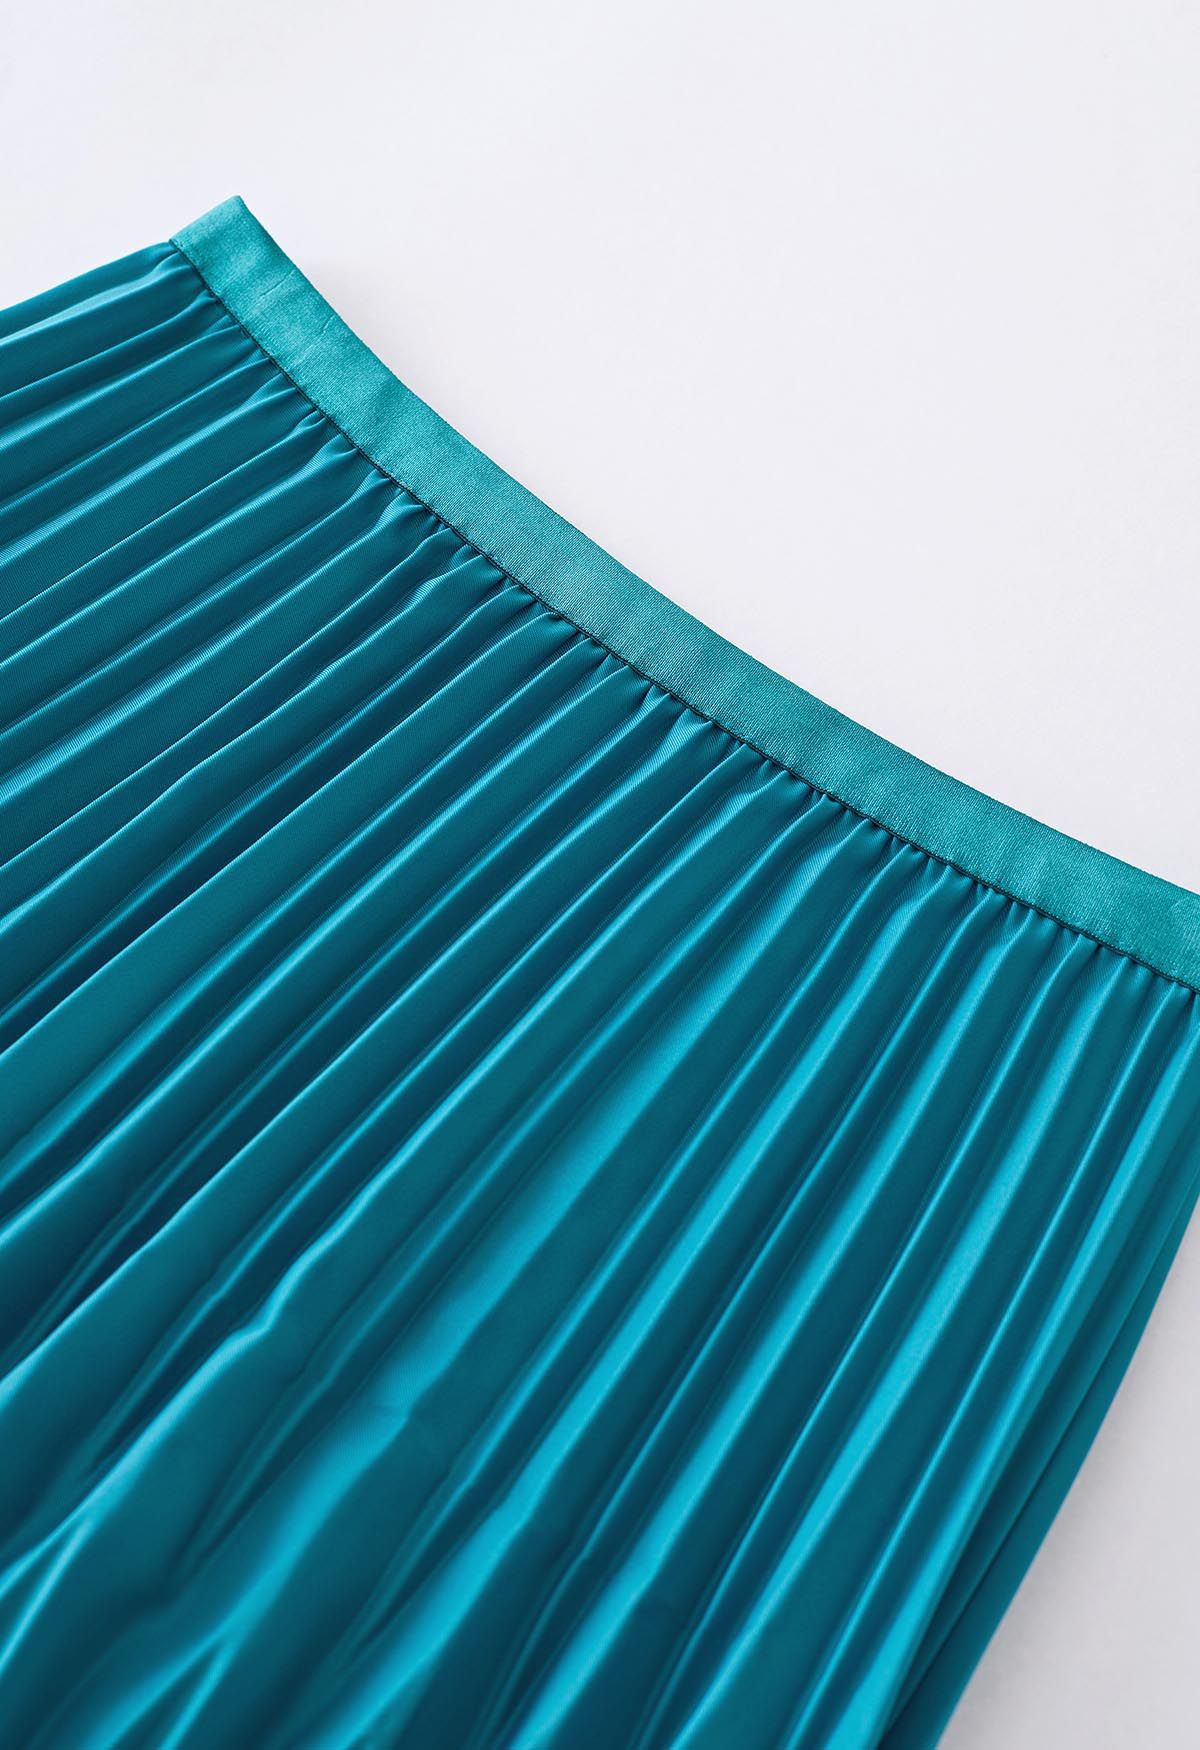 Falda midi plisada irregular en verde azulado